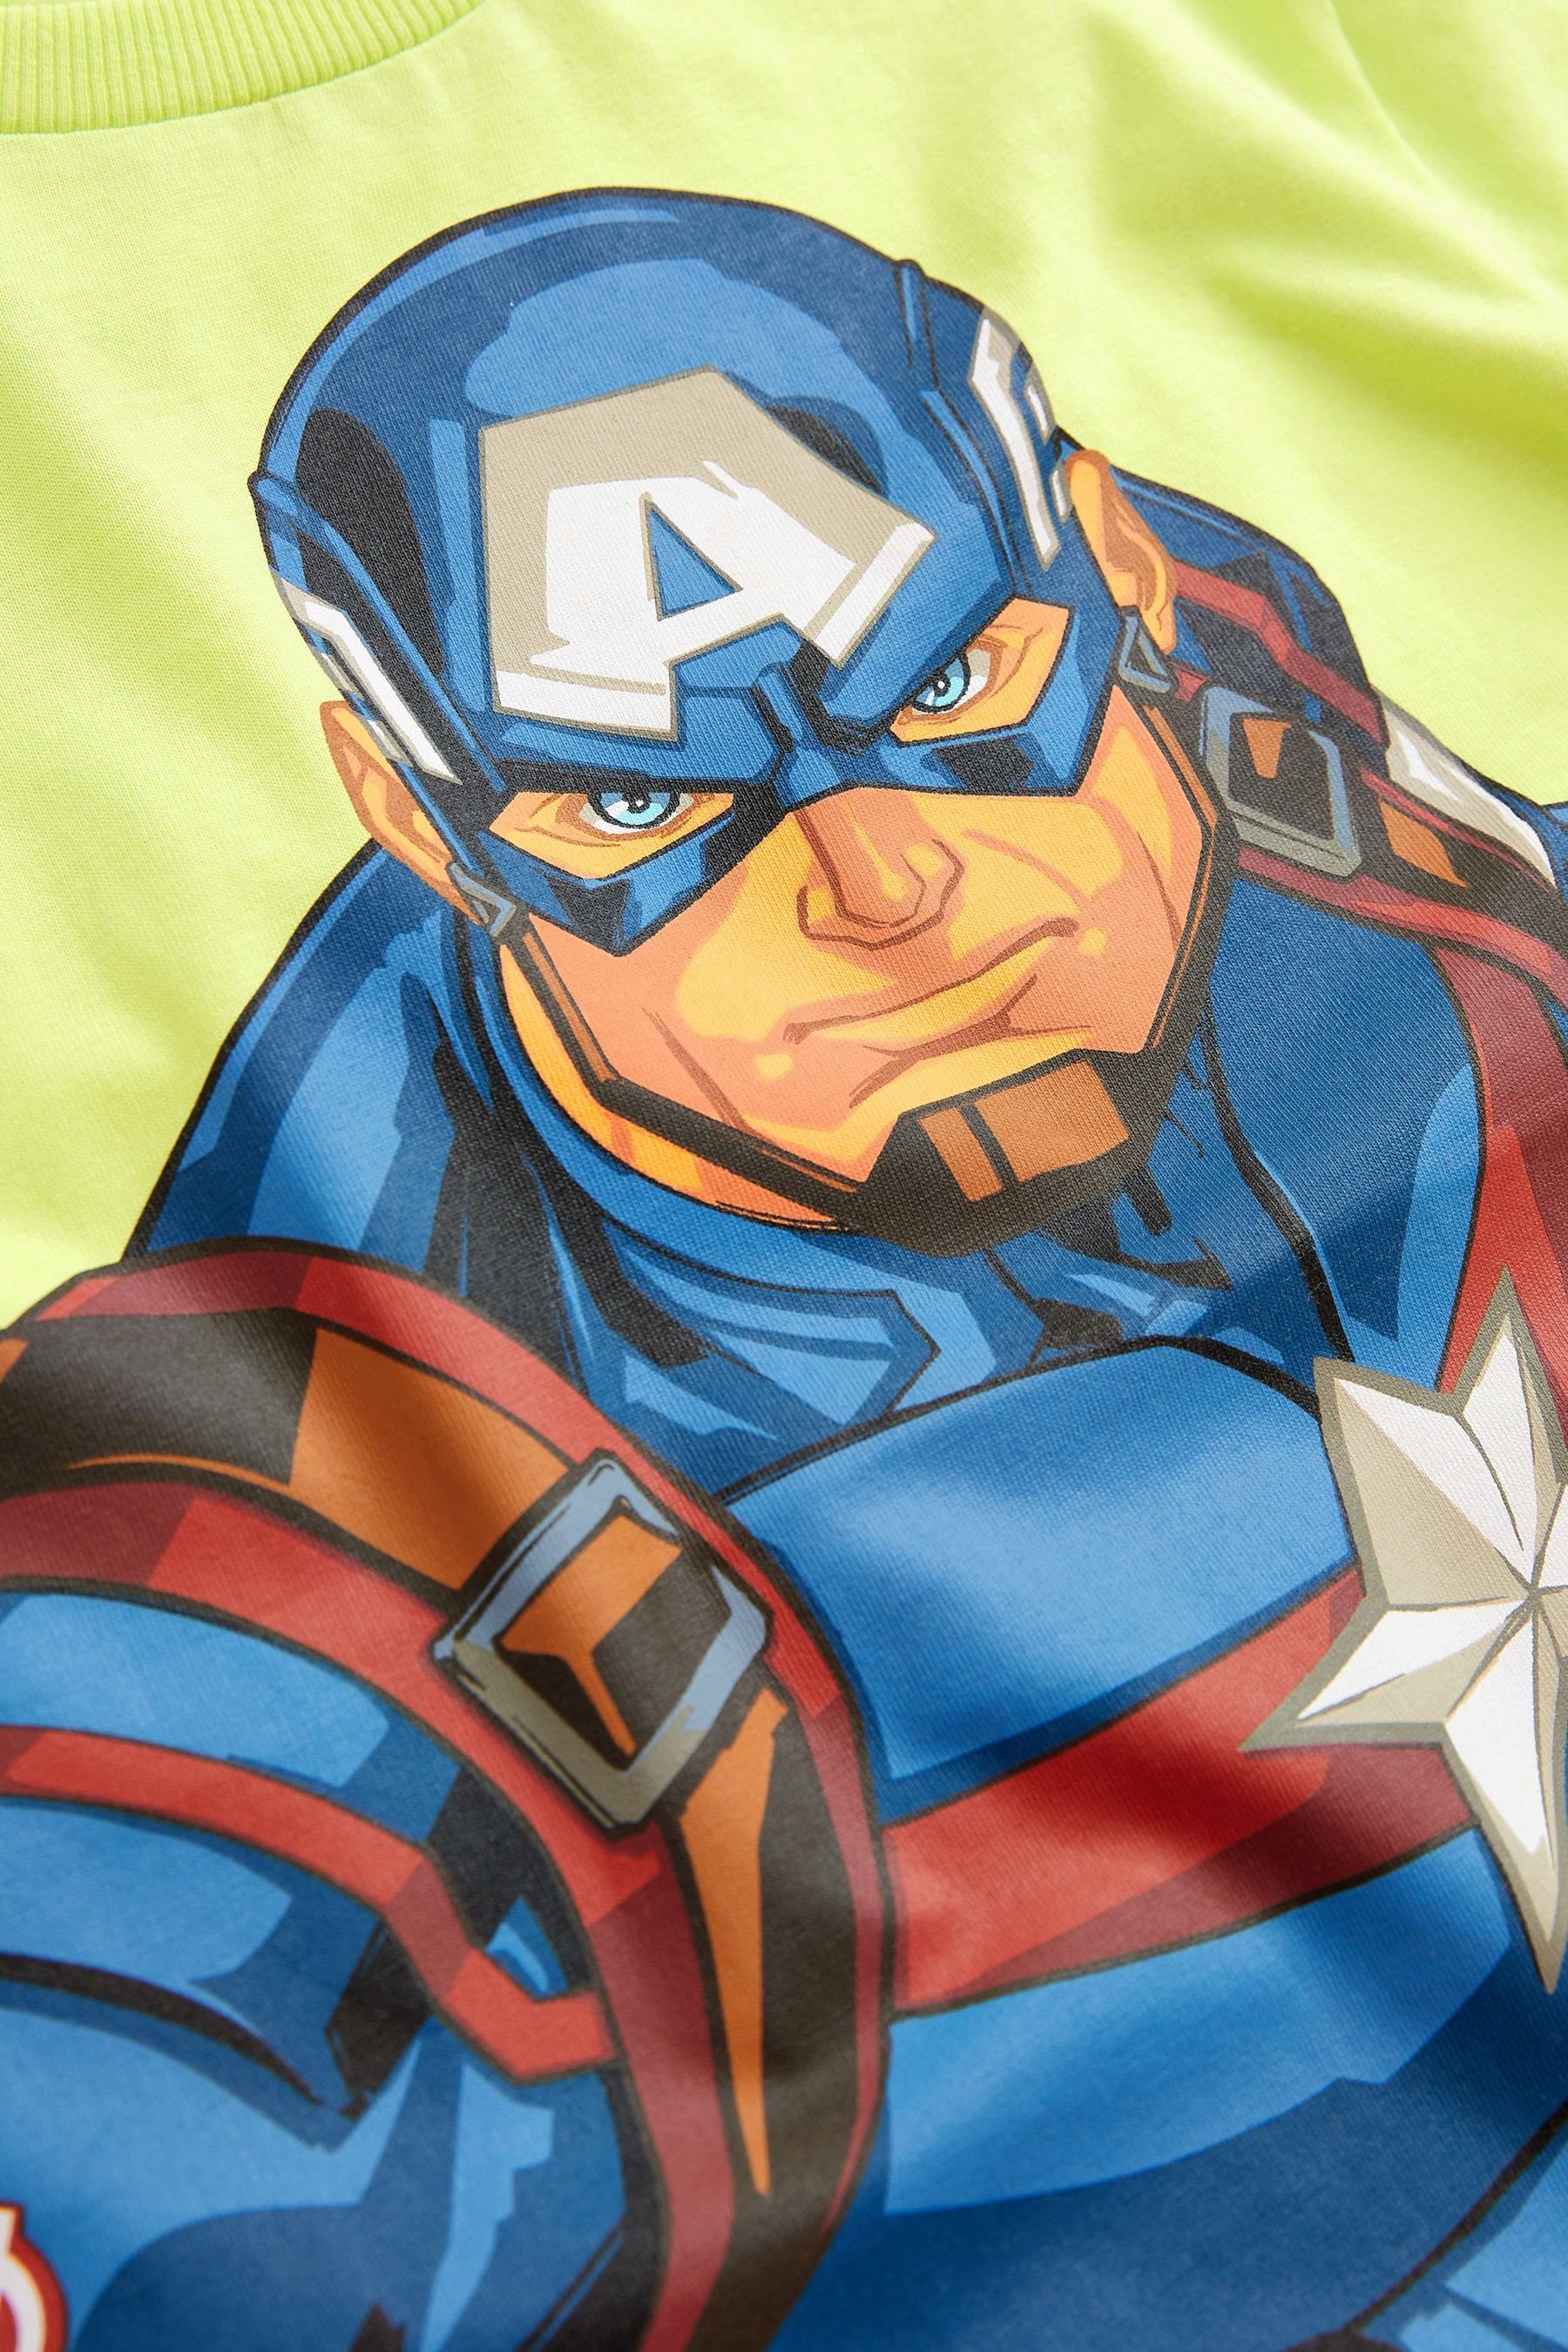 Next T-Shirt Avengers Superhero Green America License Lime Captain T-Shirt (1-tlg)